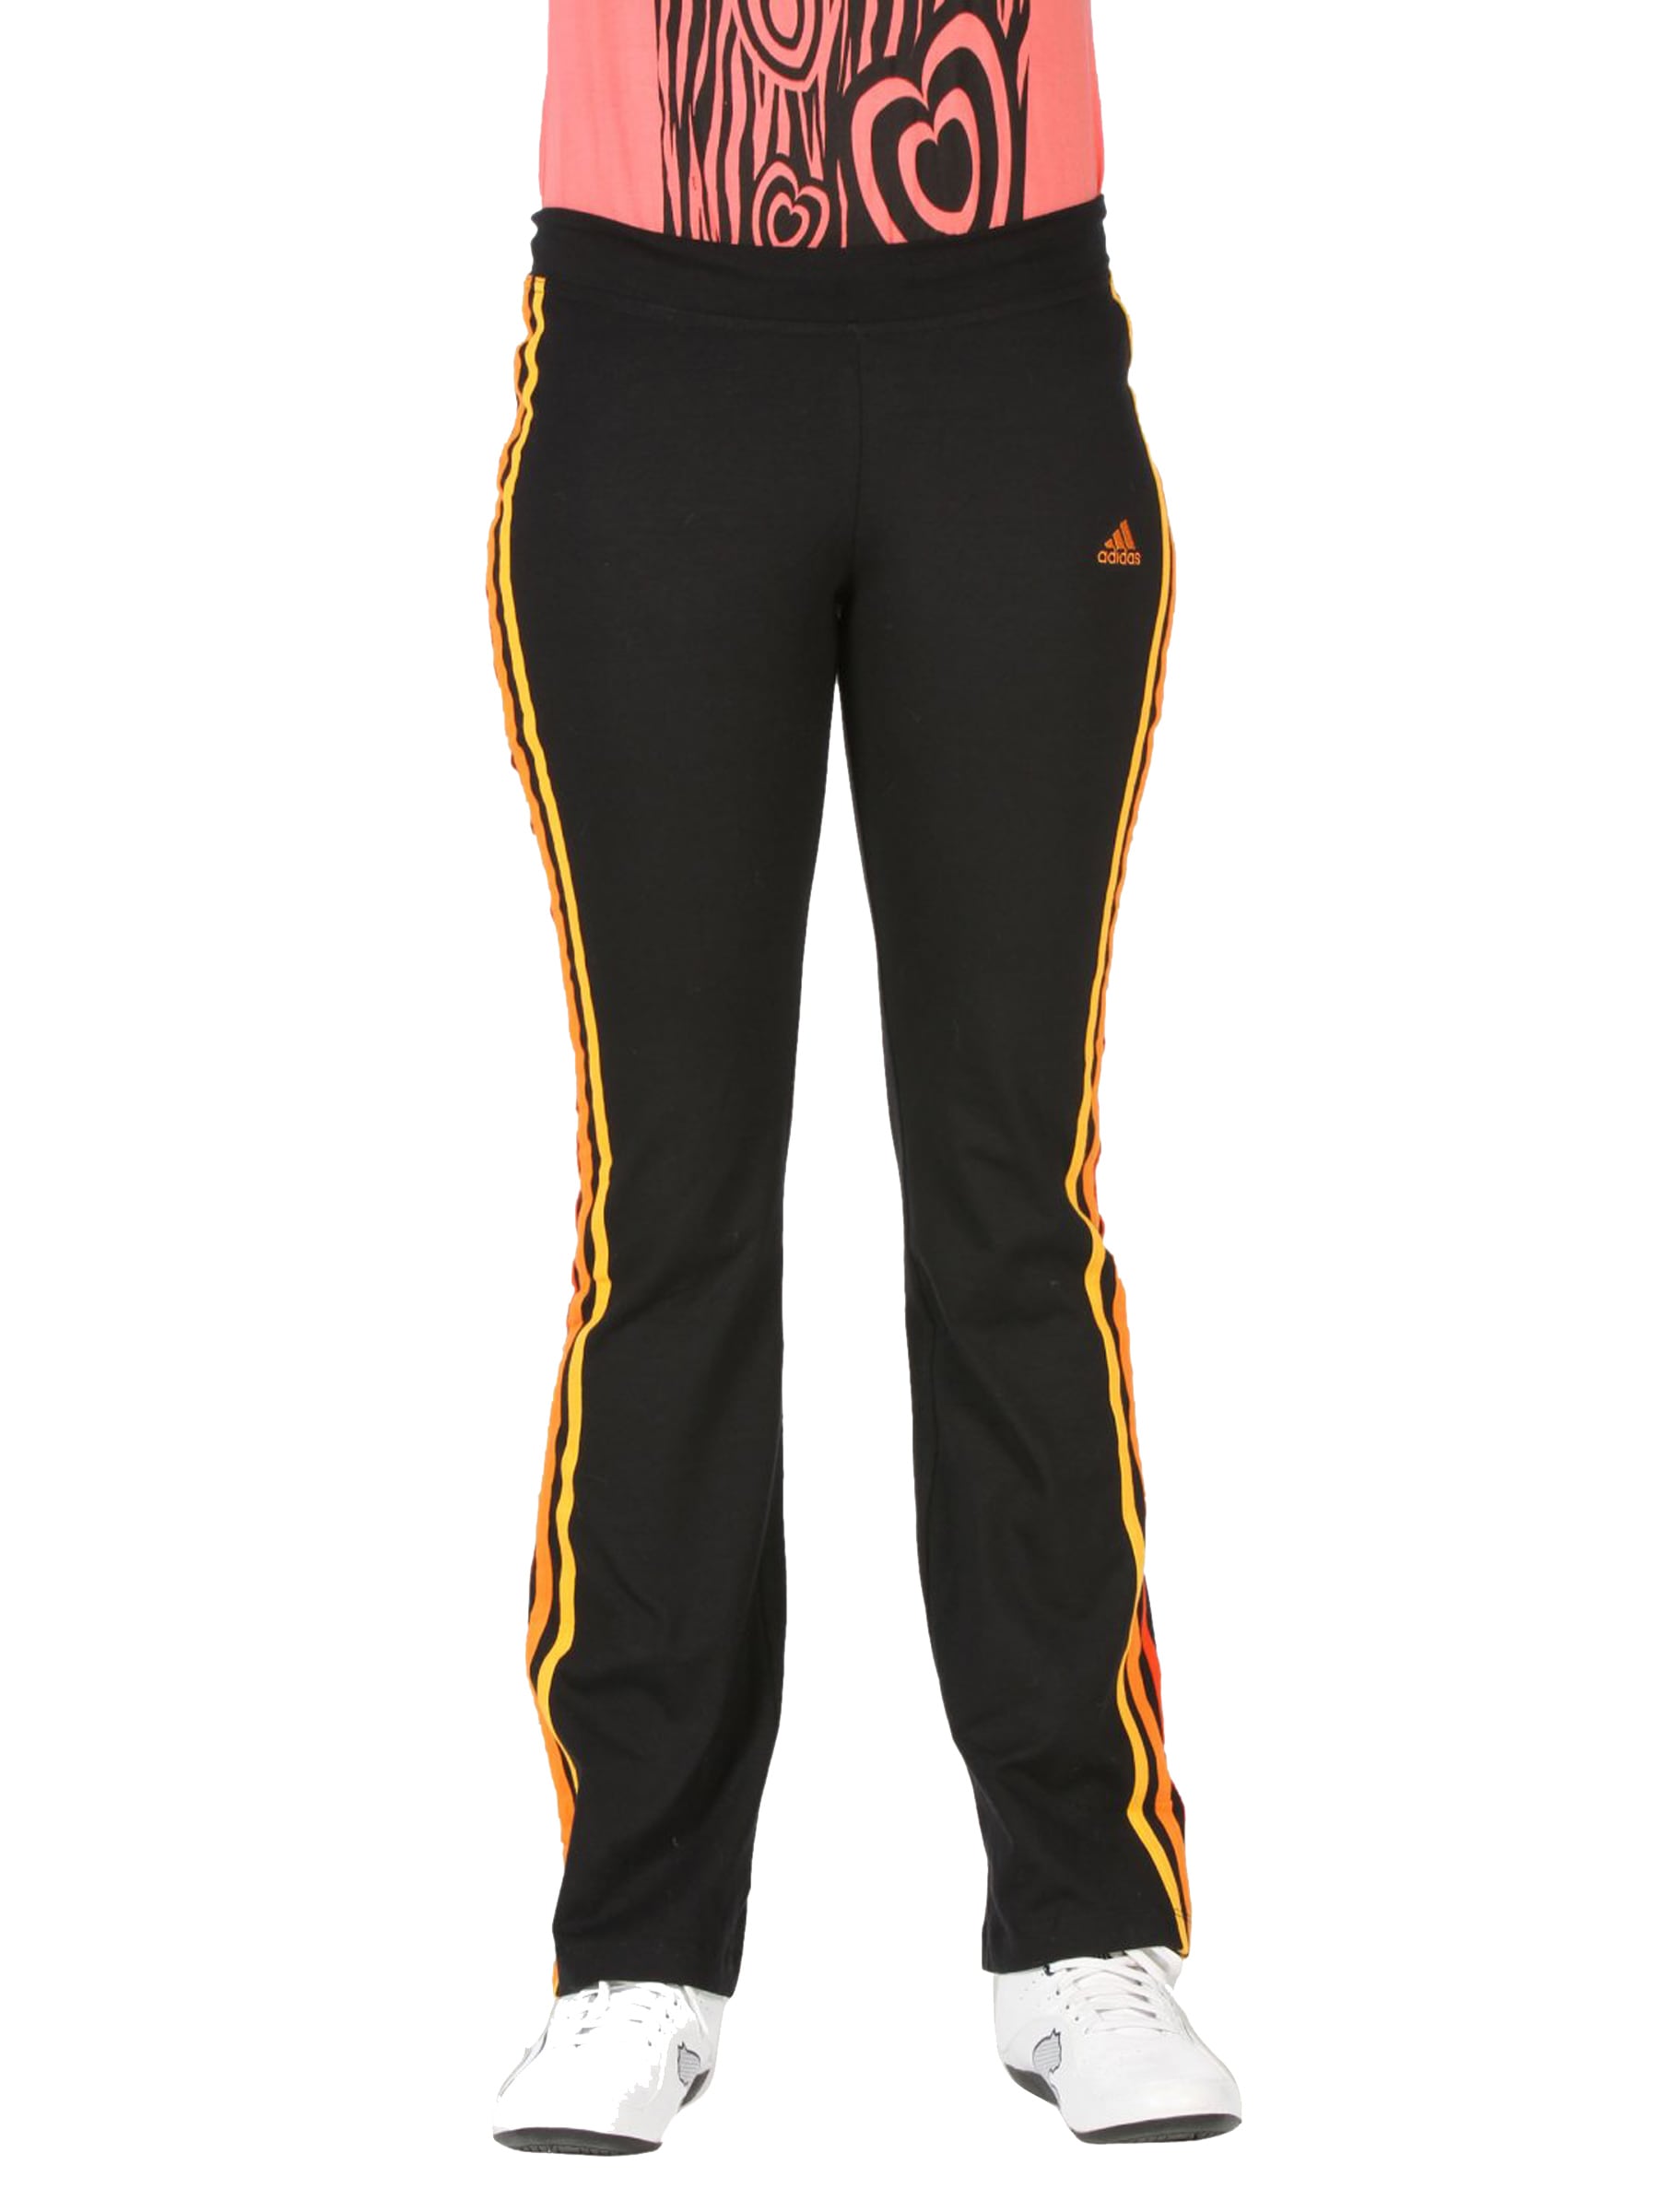 ADIDAS Women's Sunset Lycra Fit Track Pants